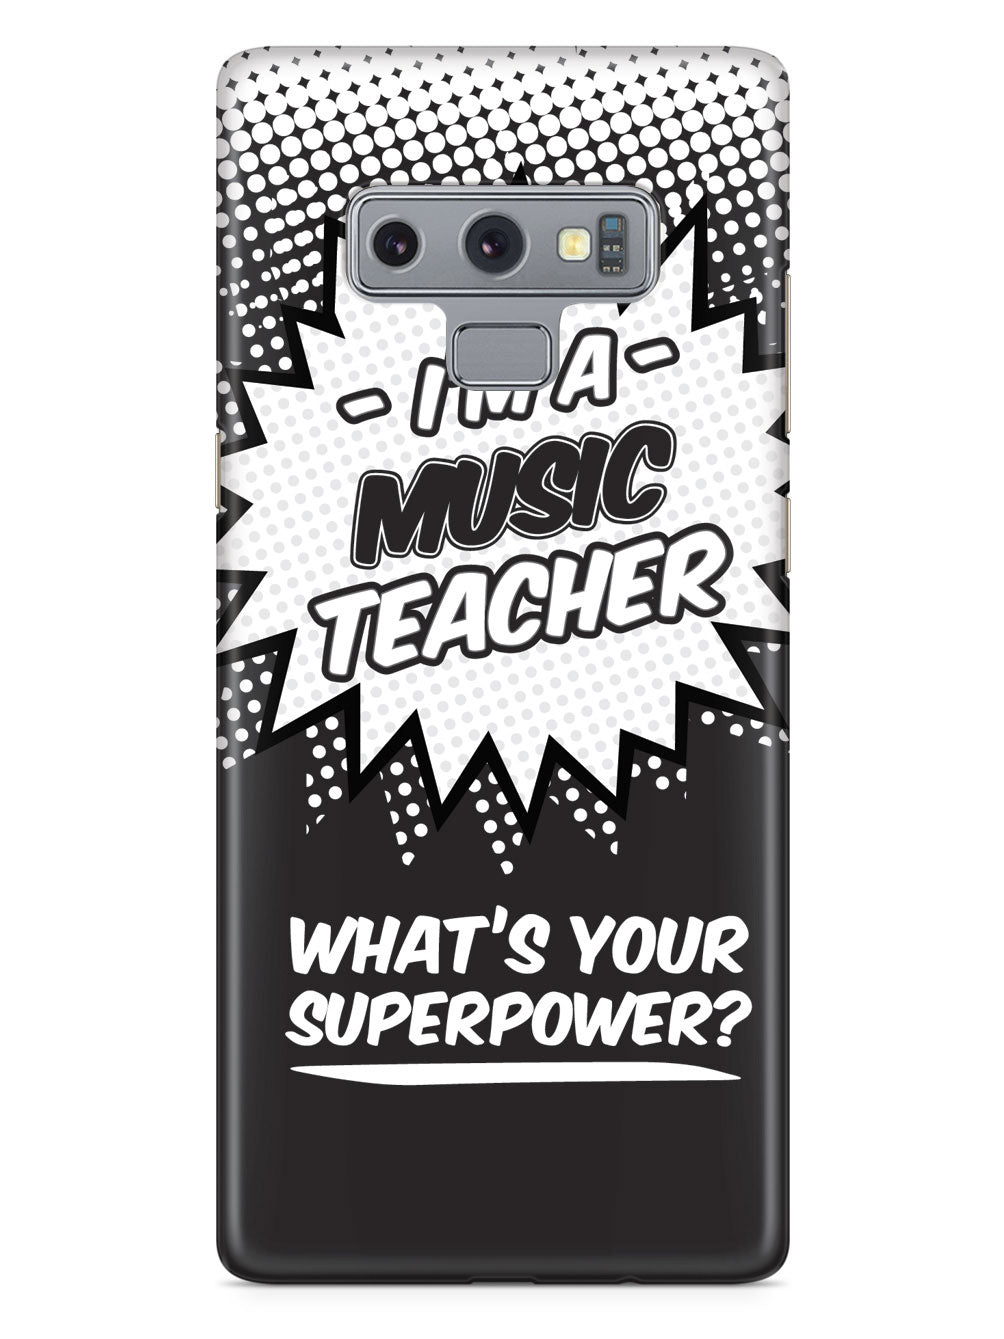 Music Teacher - What's Your Superpower? Case